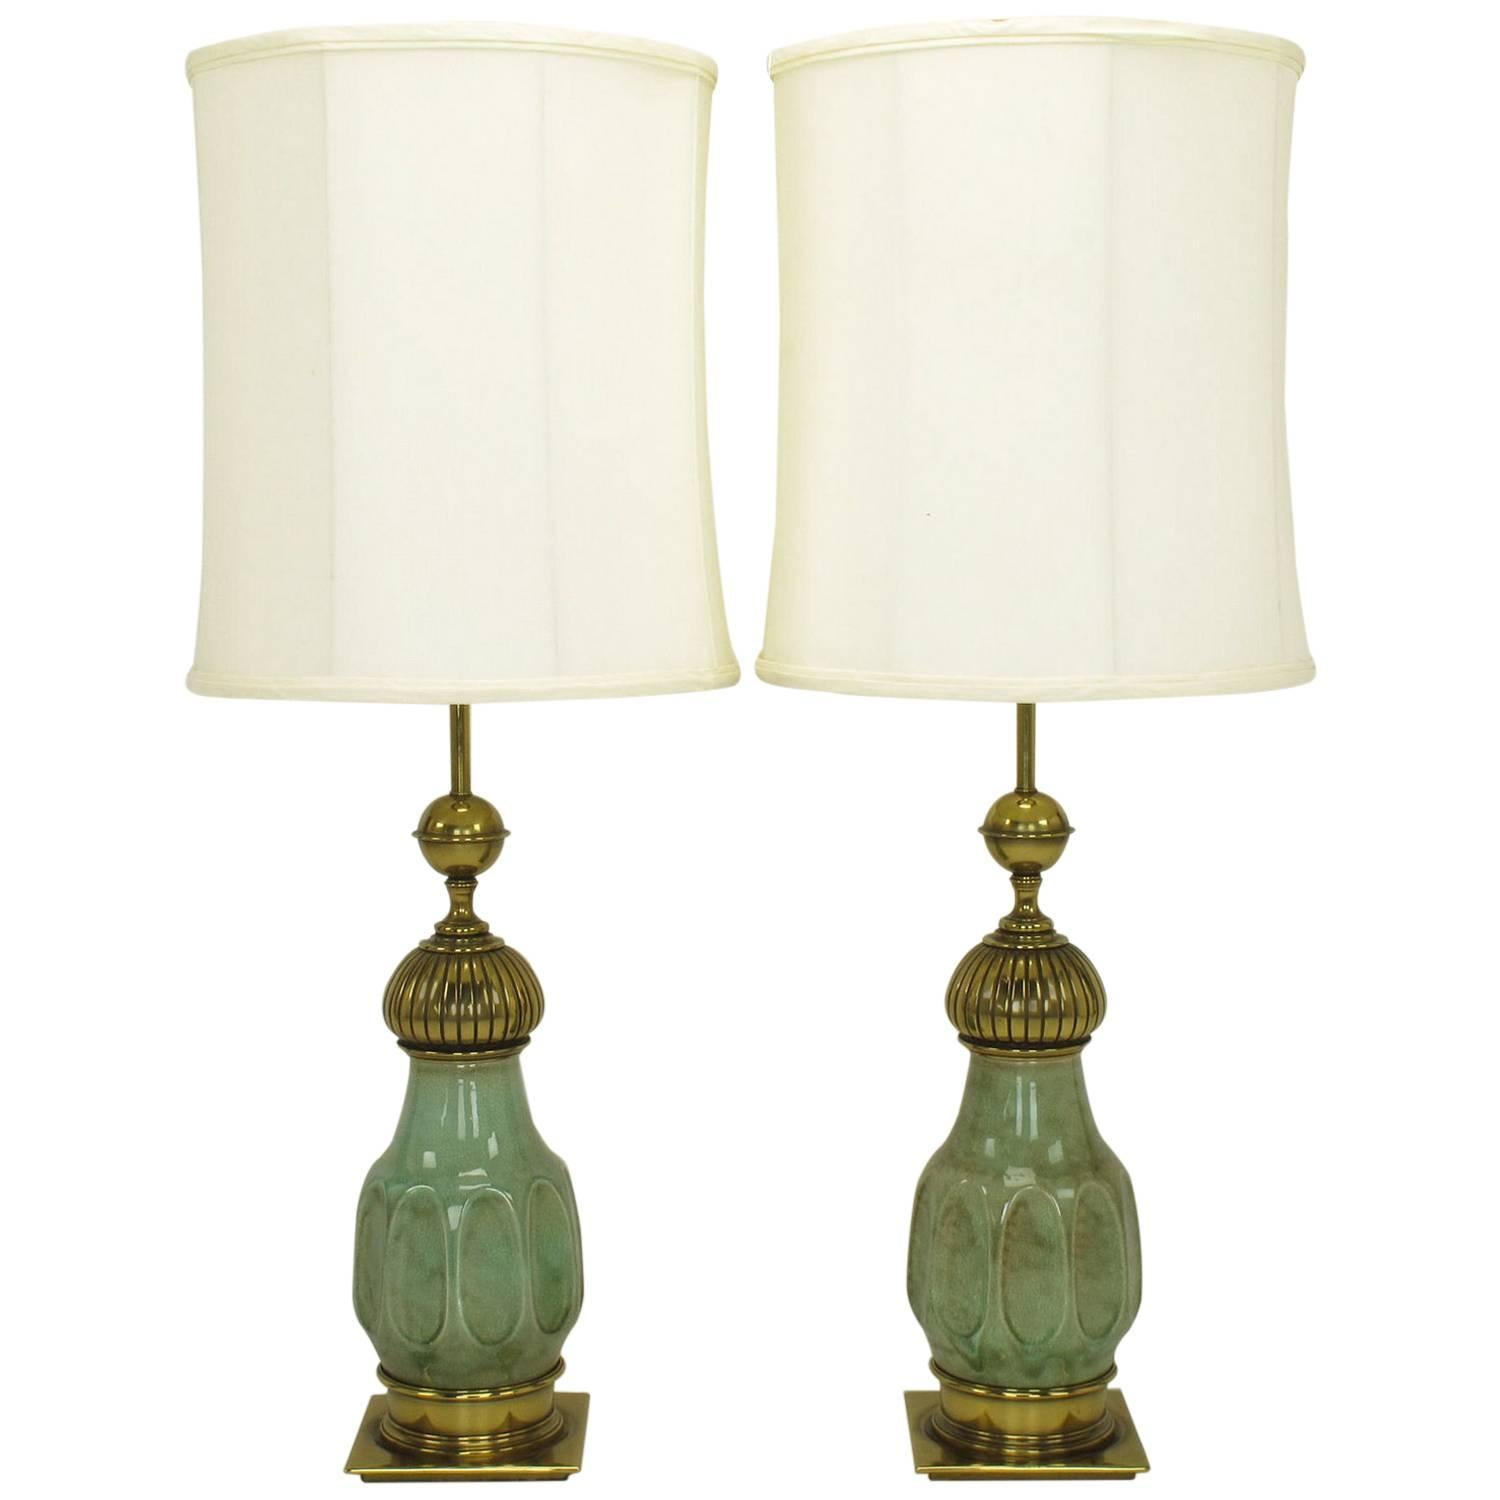 Pair of Stiffel Crackle Glaze Ceramic and Brass Moorish Style Table Lamps